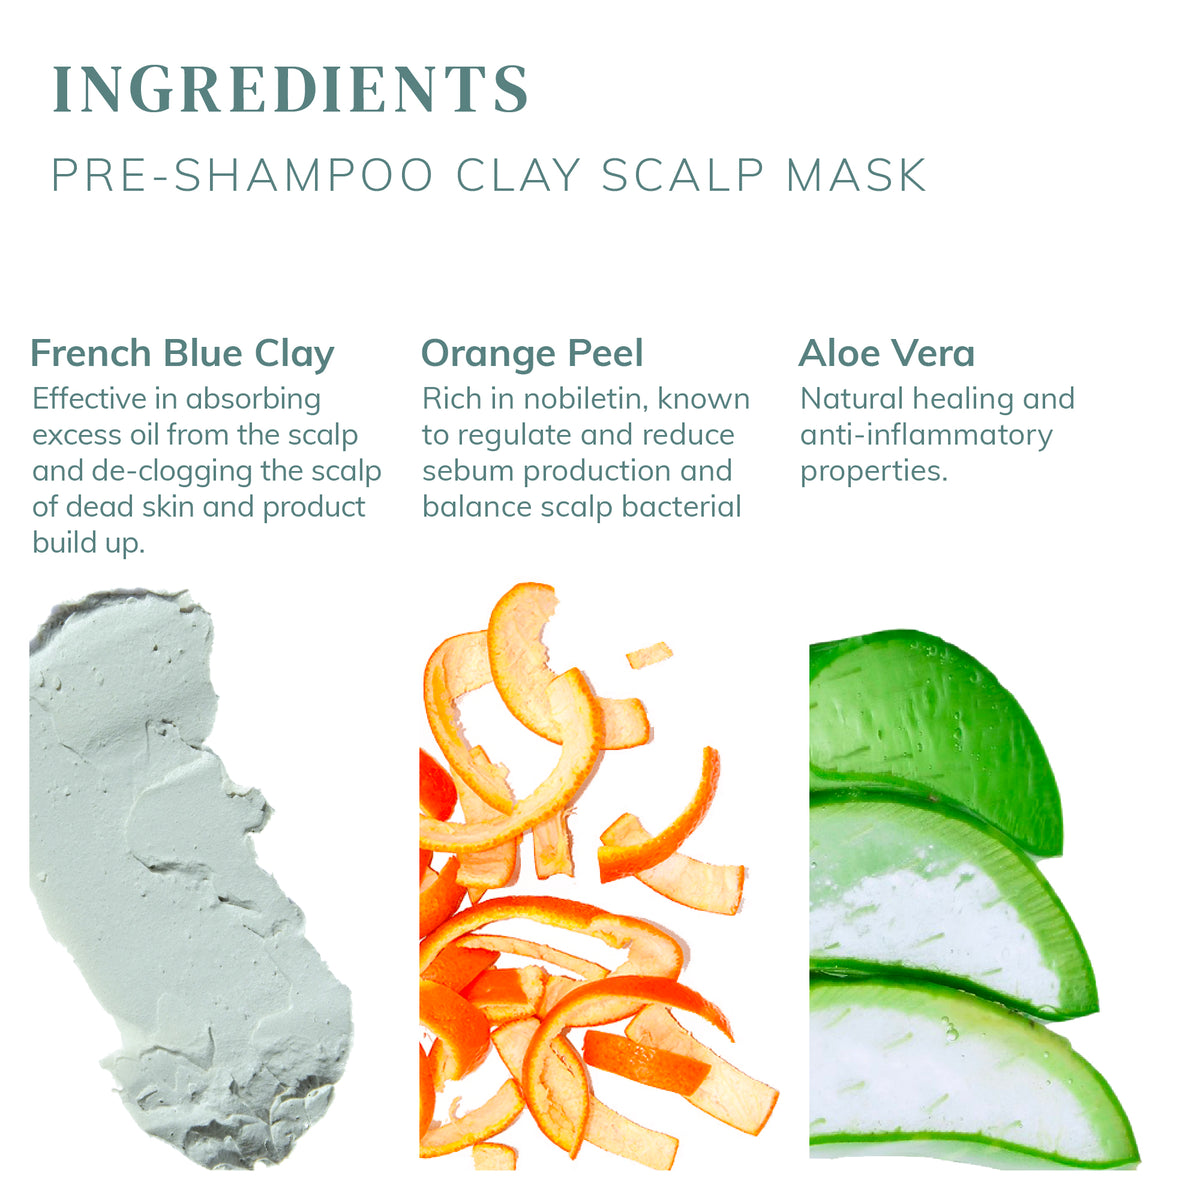 Pre-Shampoo Clay Scalp Mask